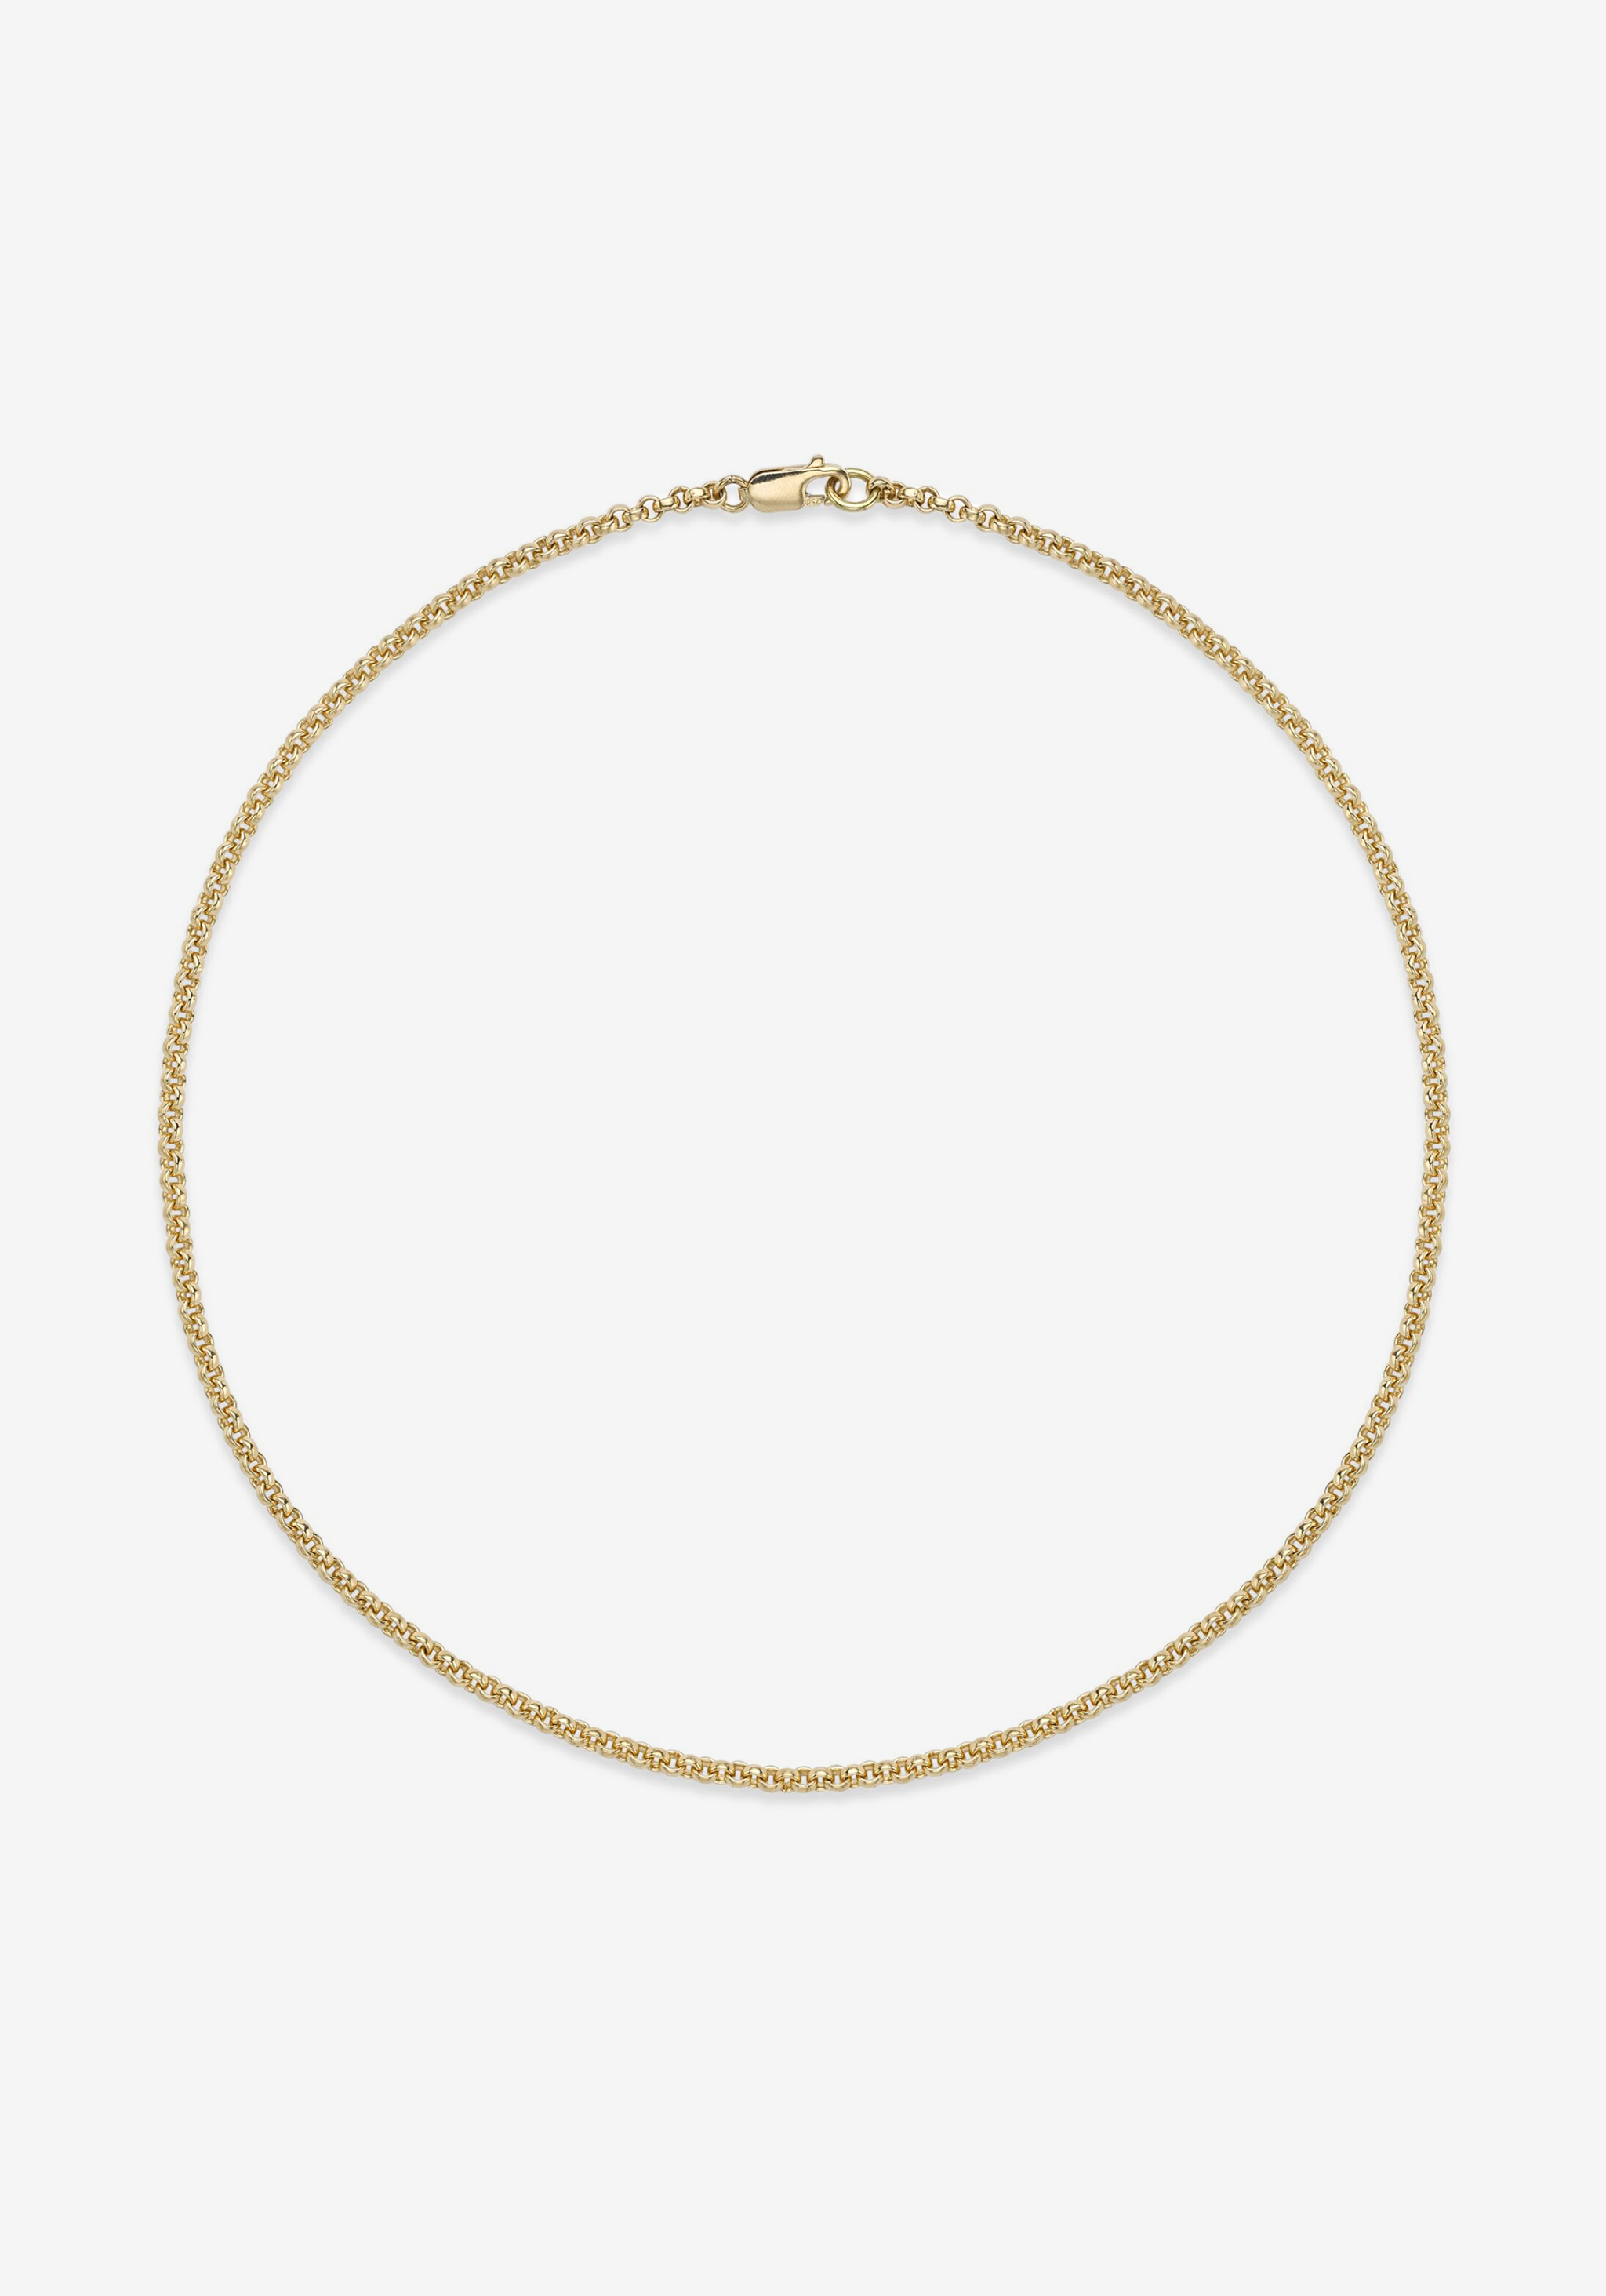 Belcher Chain - Yellow Gold